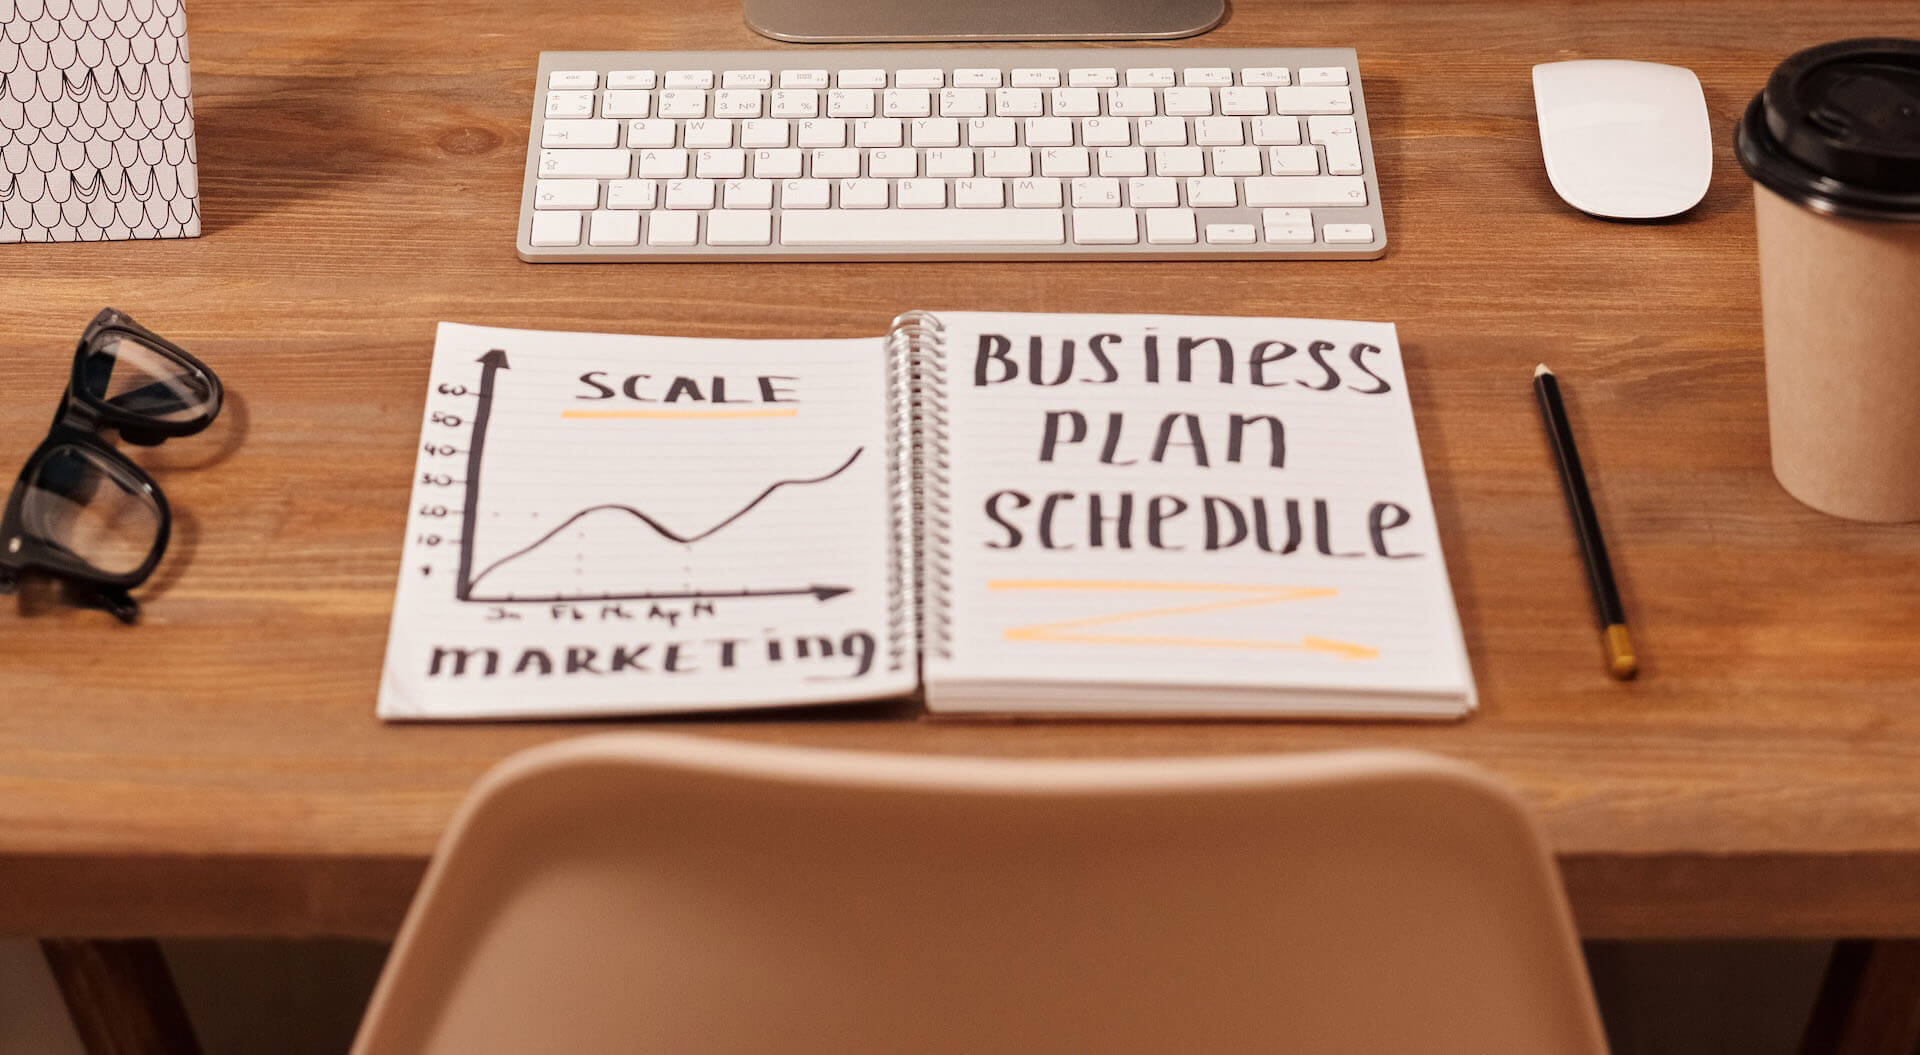 Business Plan Schedule Written on the Notebook